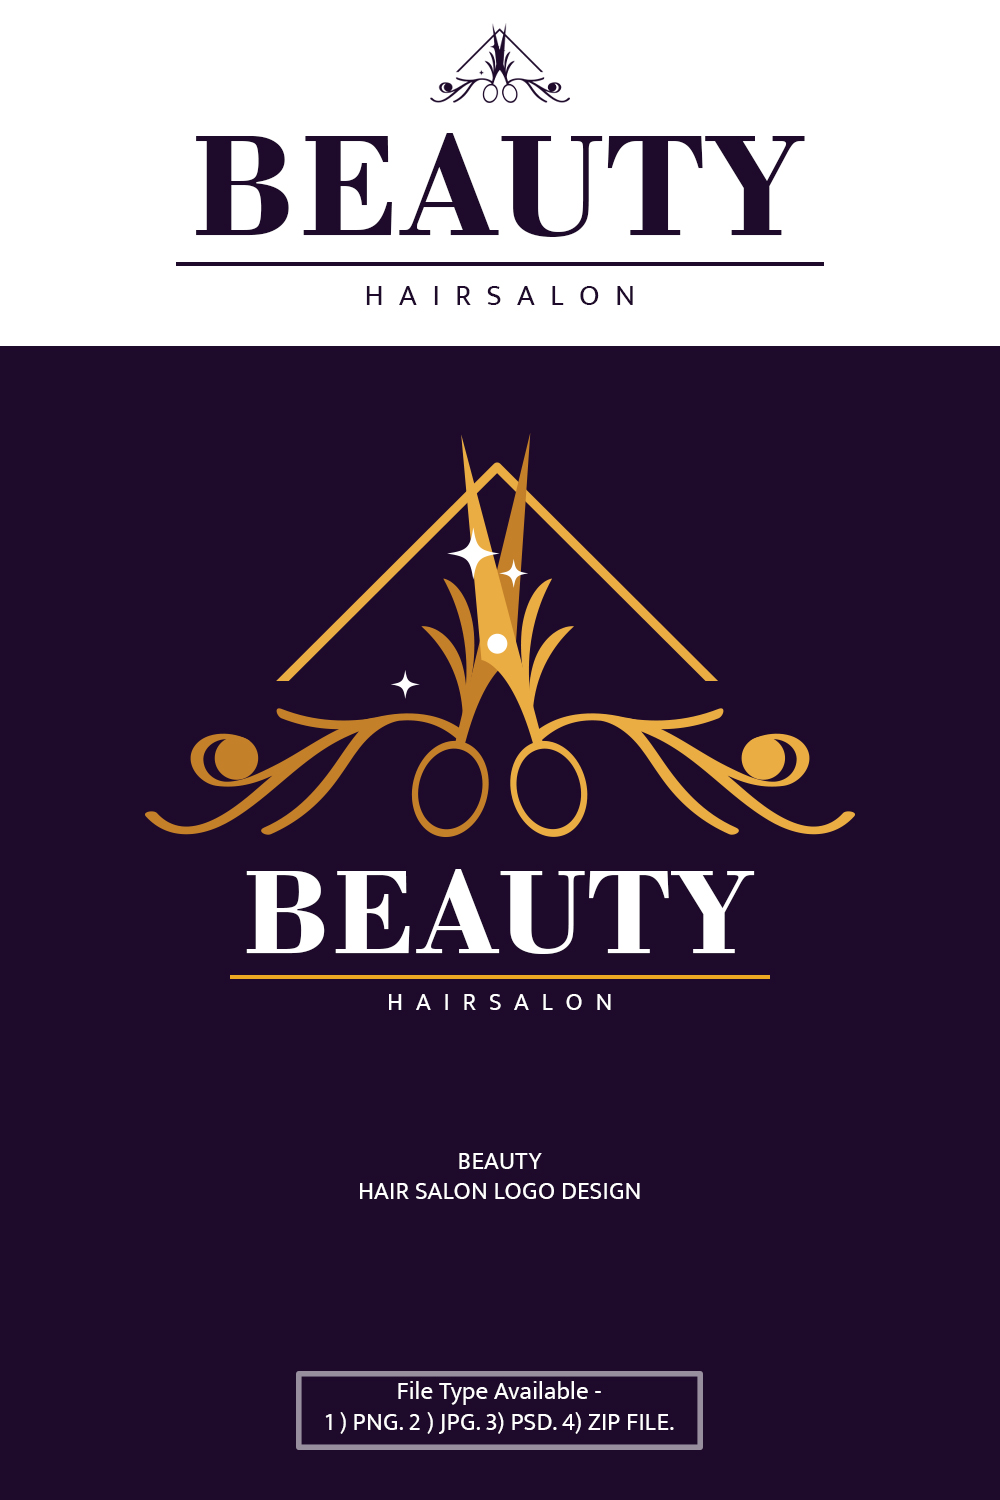 Beauty Hairsalon Logo Design l Salon Logo Design l Shop Logo pinterest preview image.